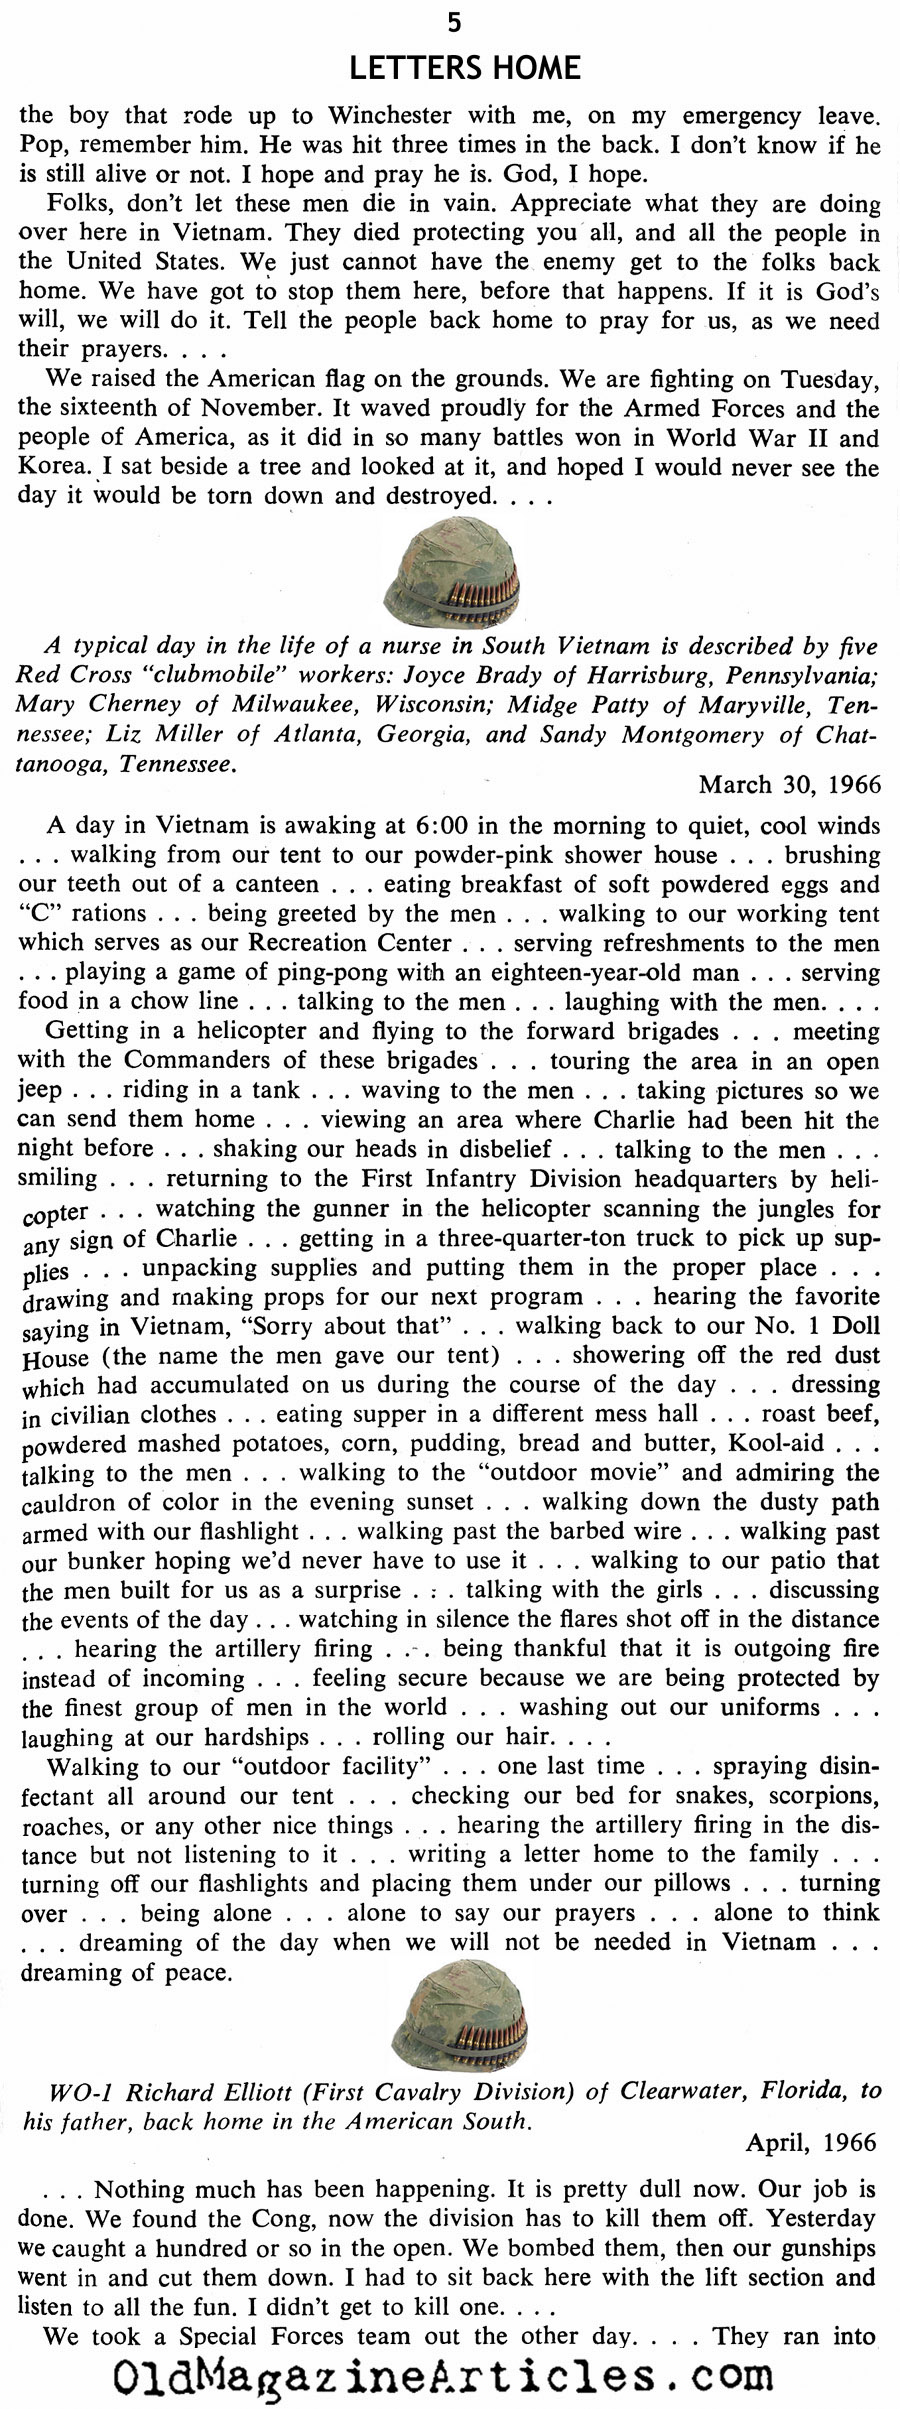 Letters from Vietnam (Coronet Magazine, 1967)